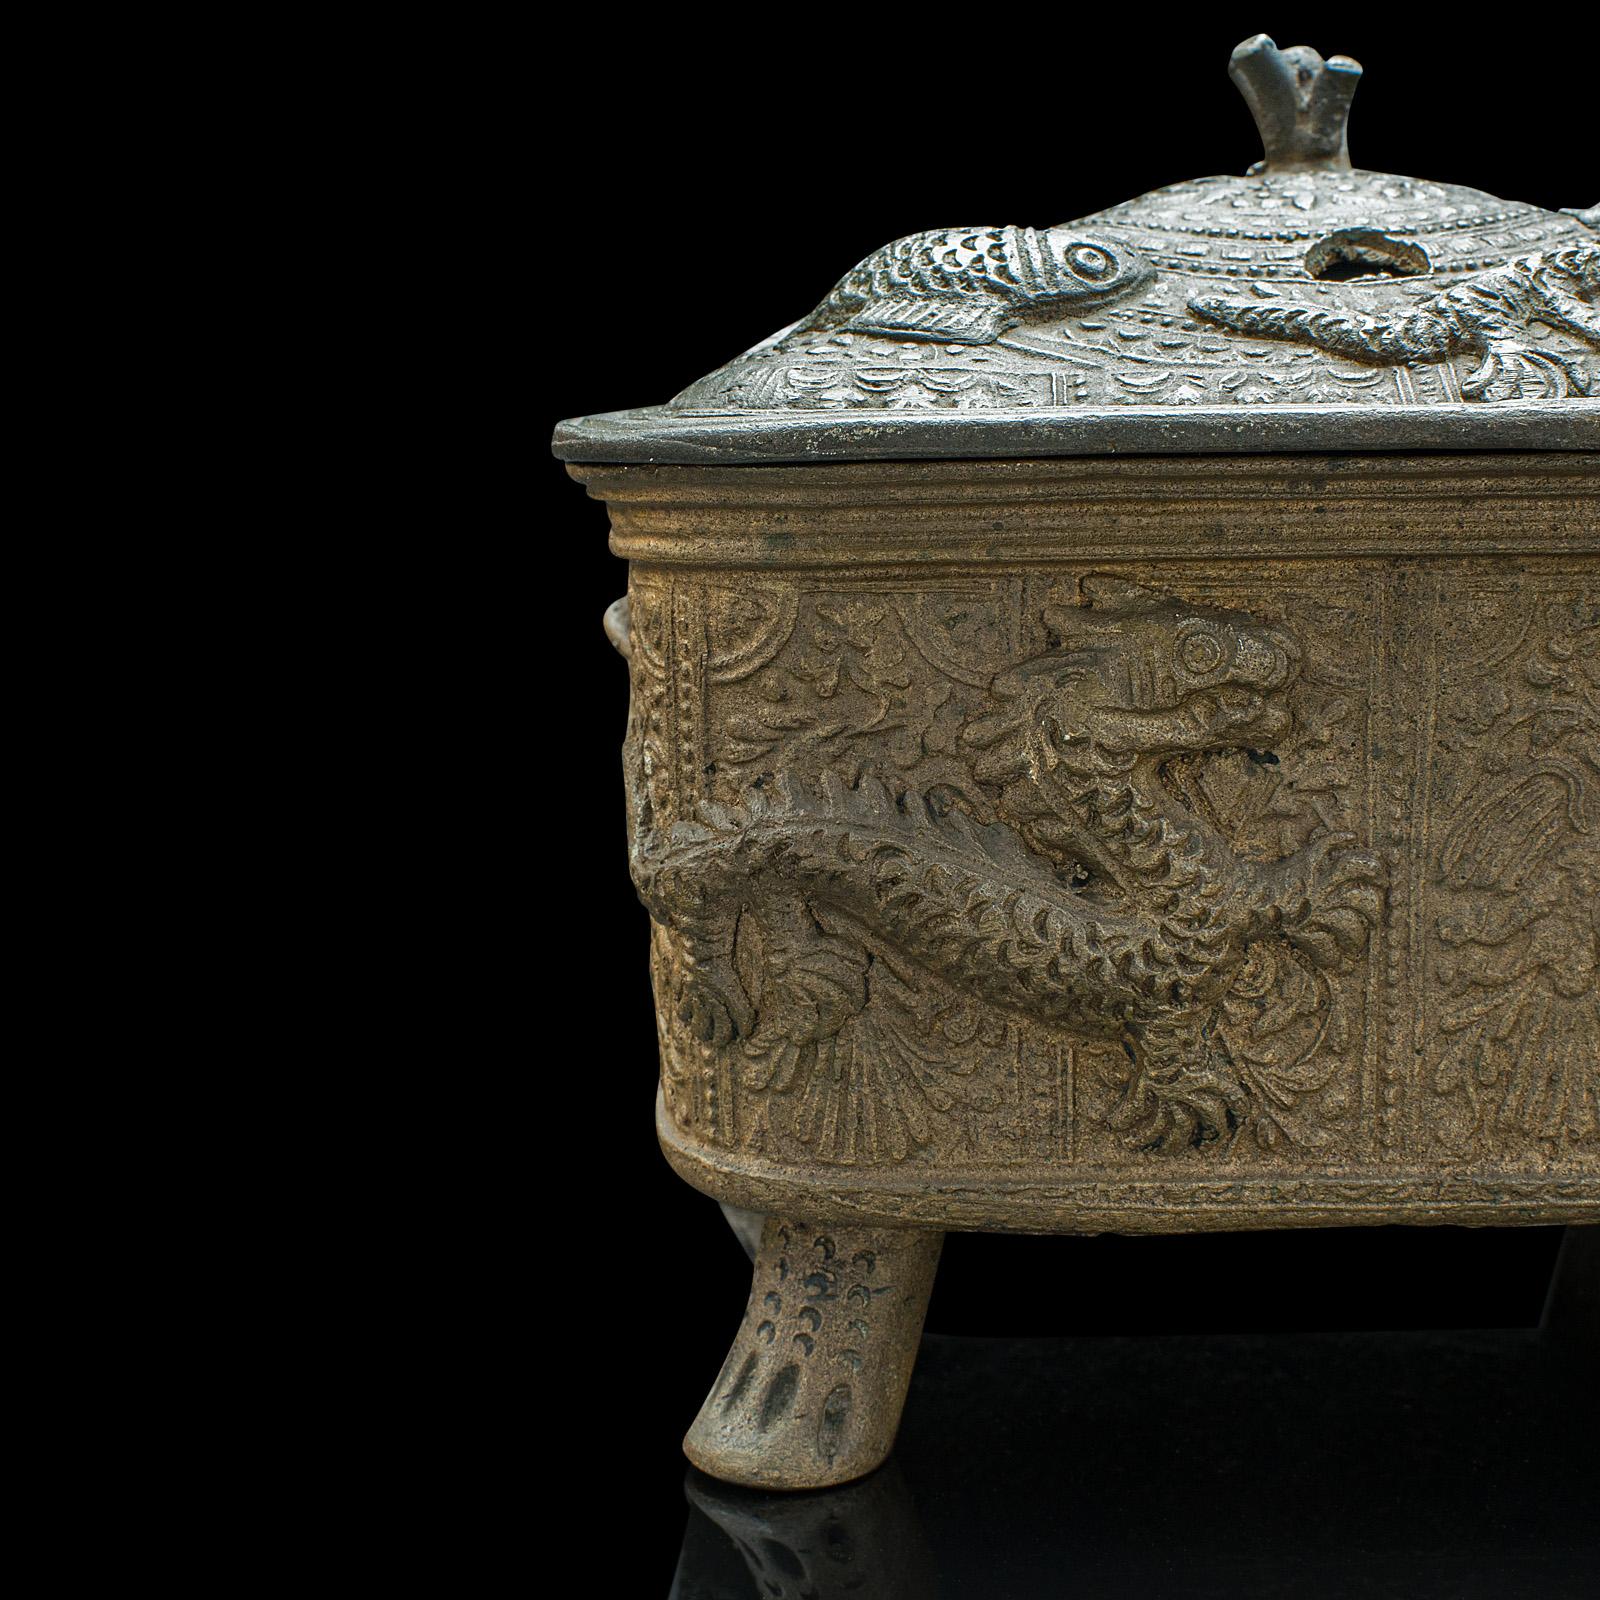 Antique Decorative Censer, Chinese, Bronze, Incense Burner, Victorian, C.1850 For Sale 5